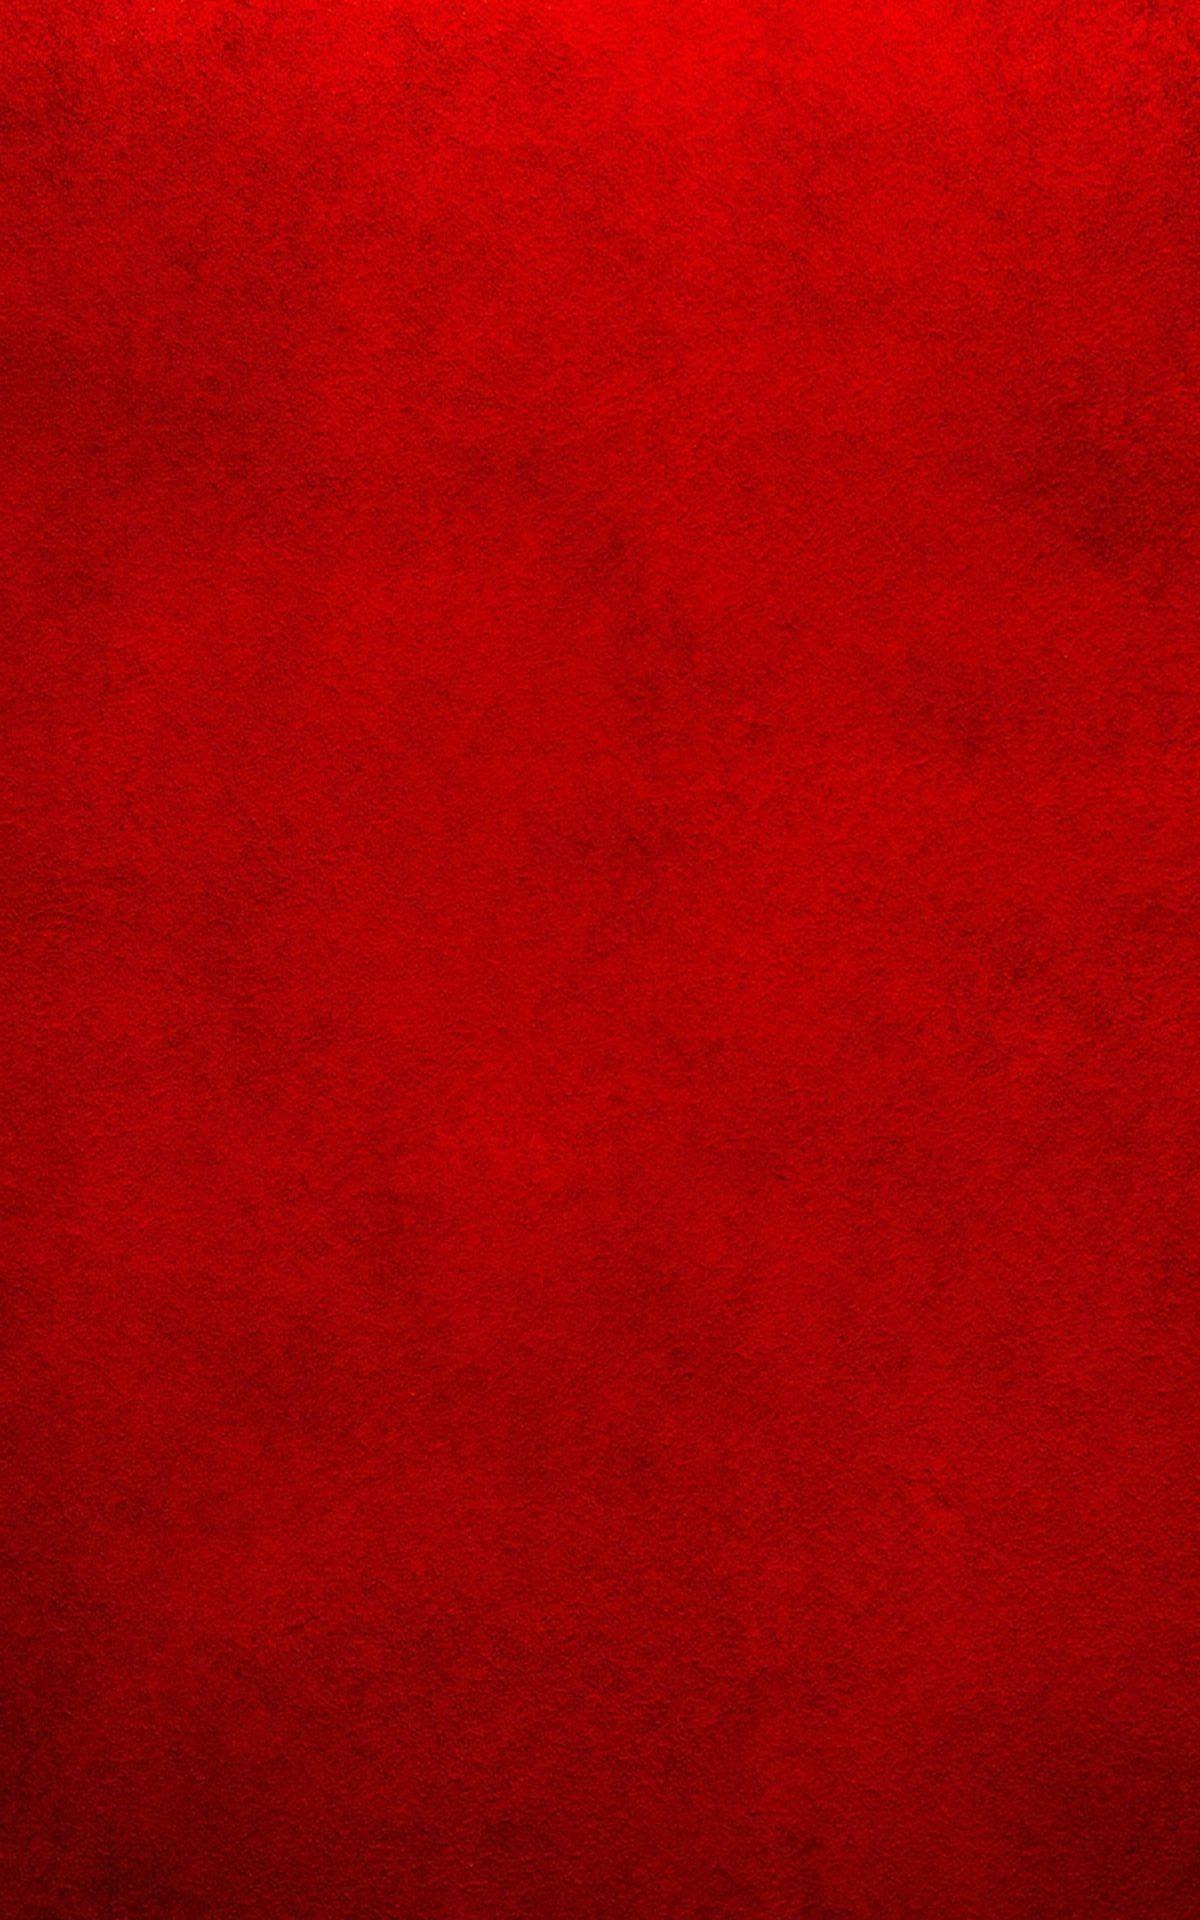 1200x1920 Red Rose Hình Nền iPhone X. 2019 Hình Nền 3D iPhone